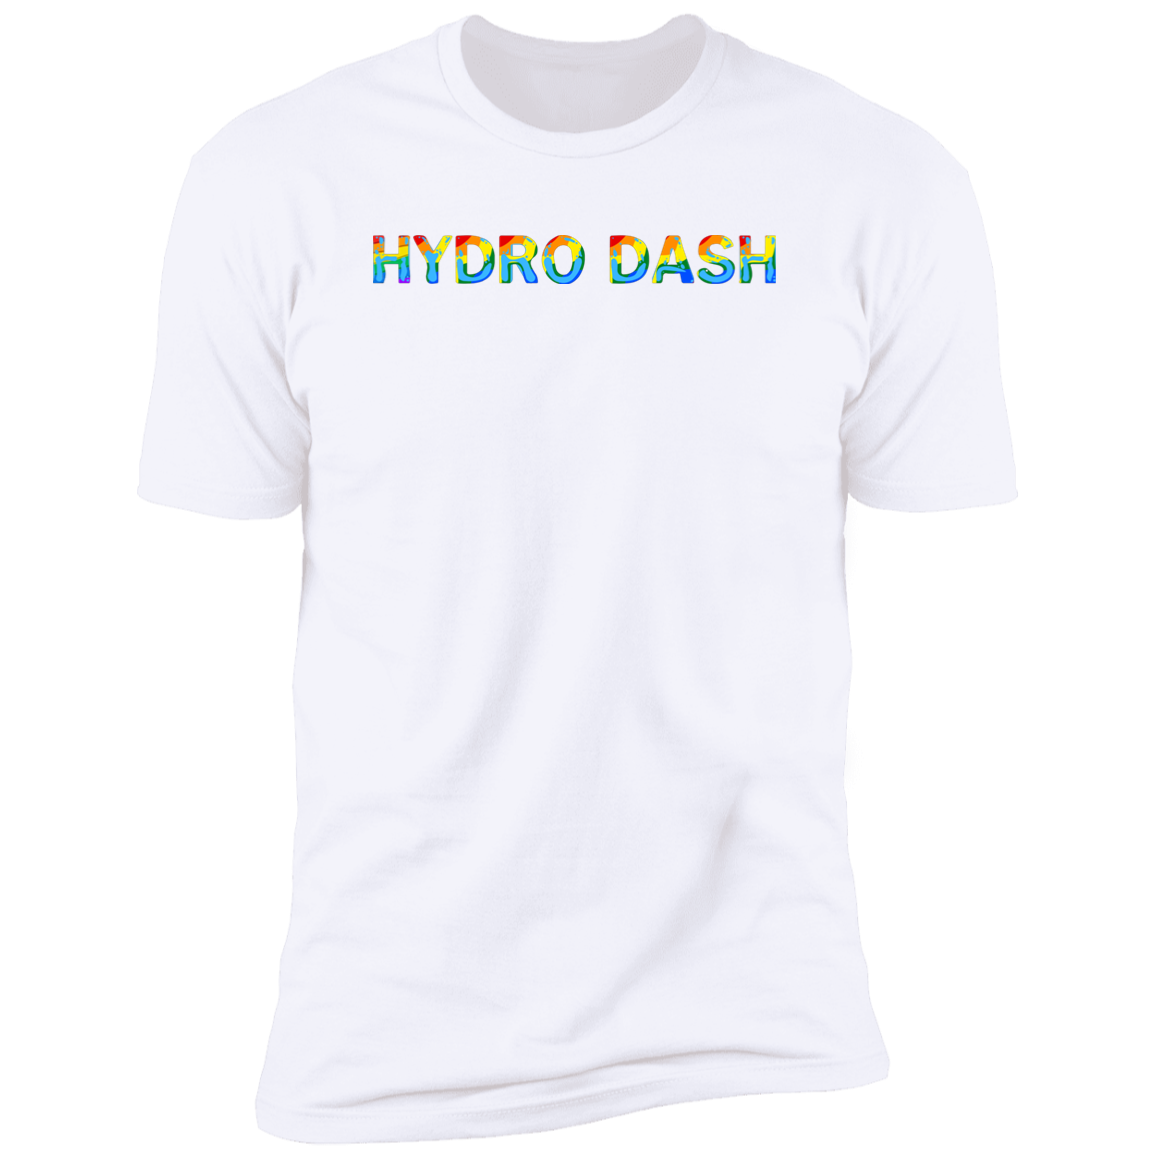  Hydro Dash Pride 2023  t-shirt, dog pride dog Hydro dash shirt for humans, in white